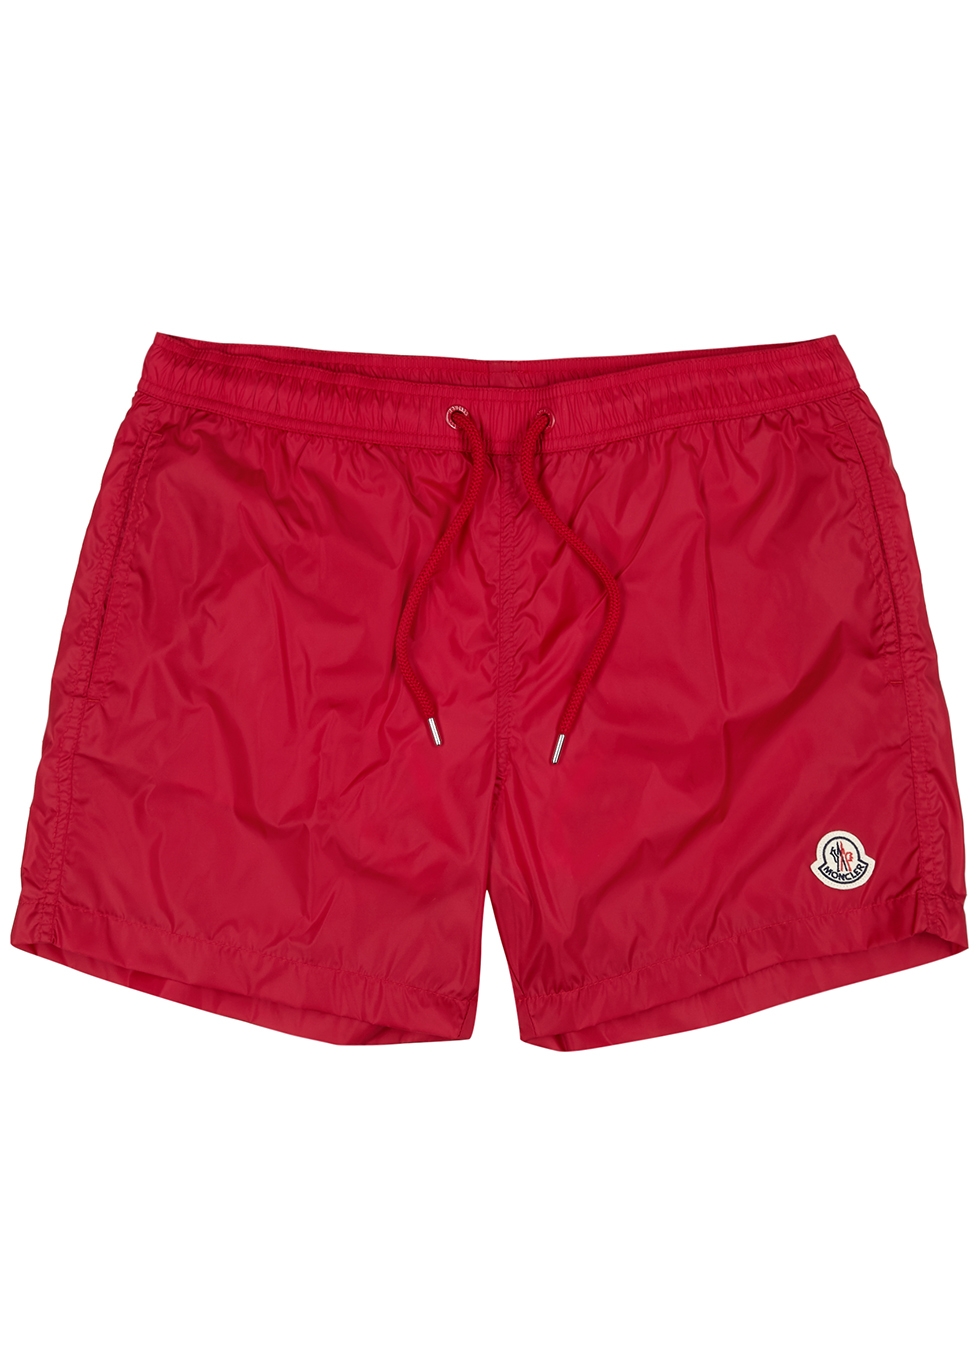 Moncler Red shell swim shorts - Harvey Nichols